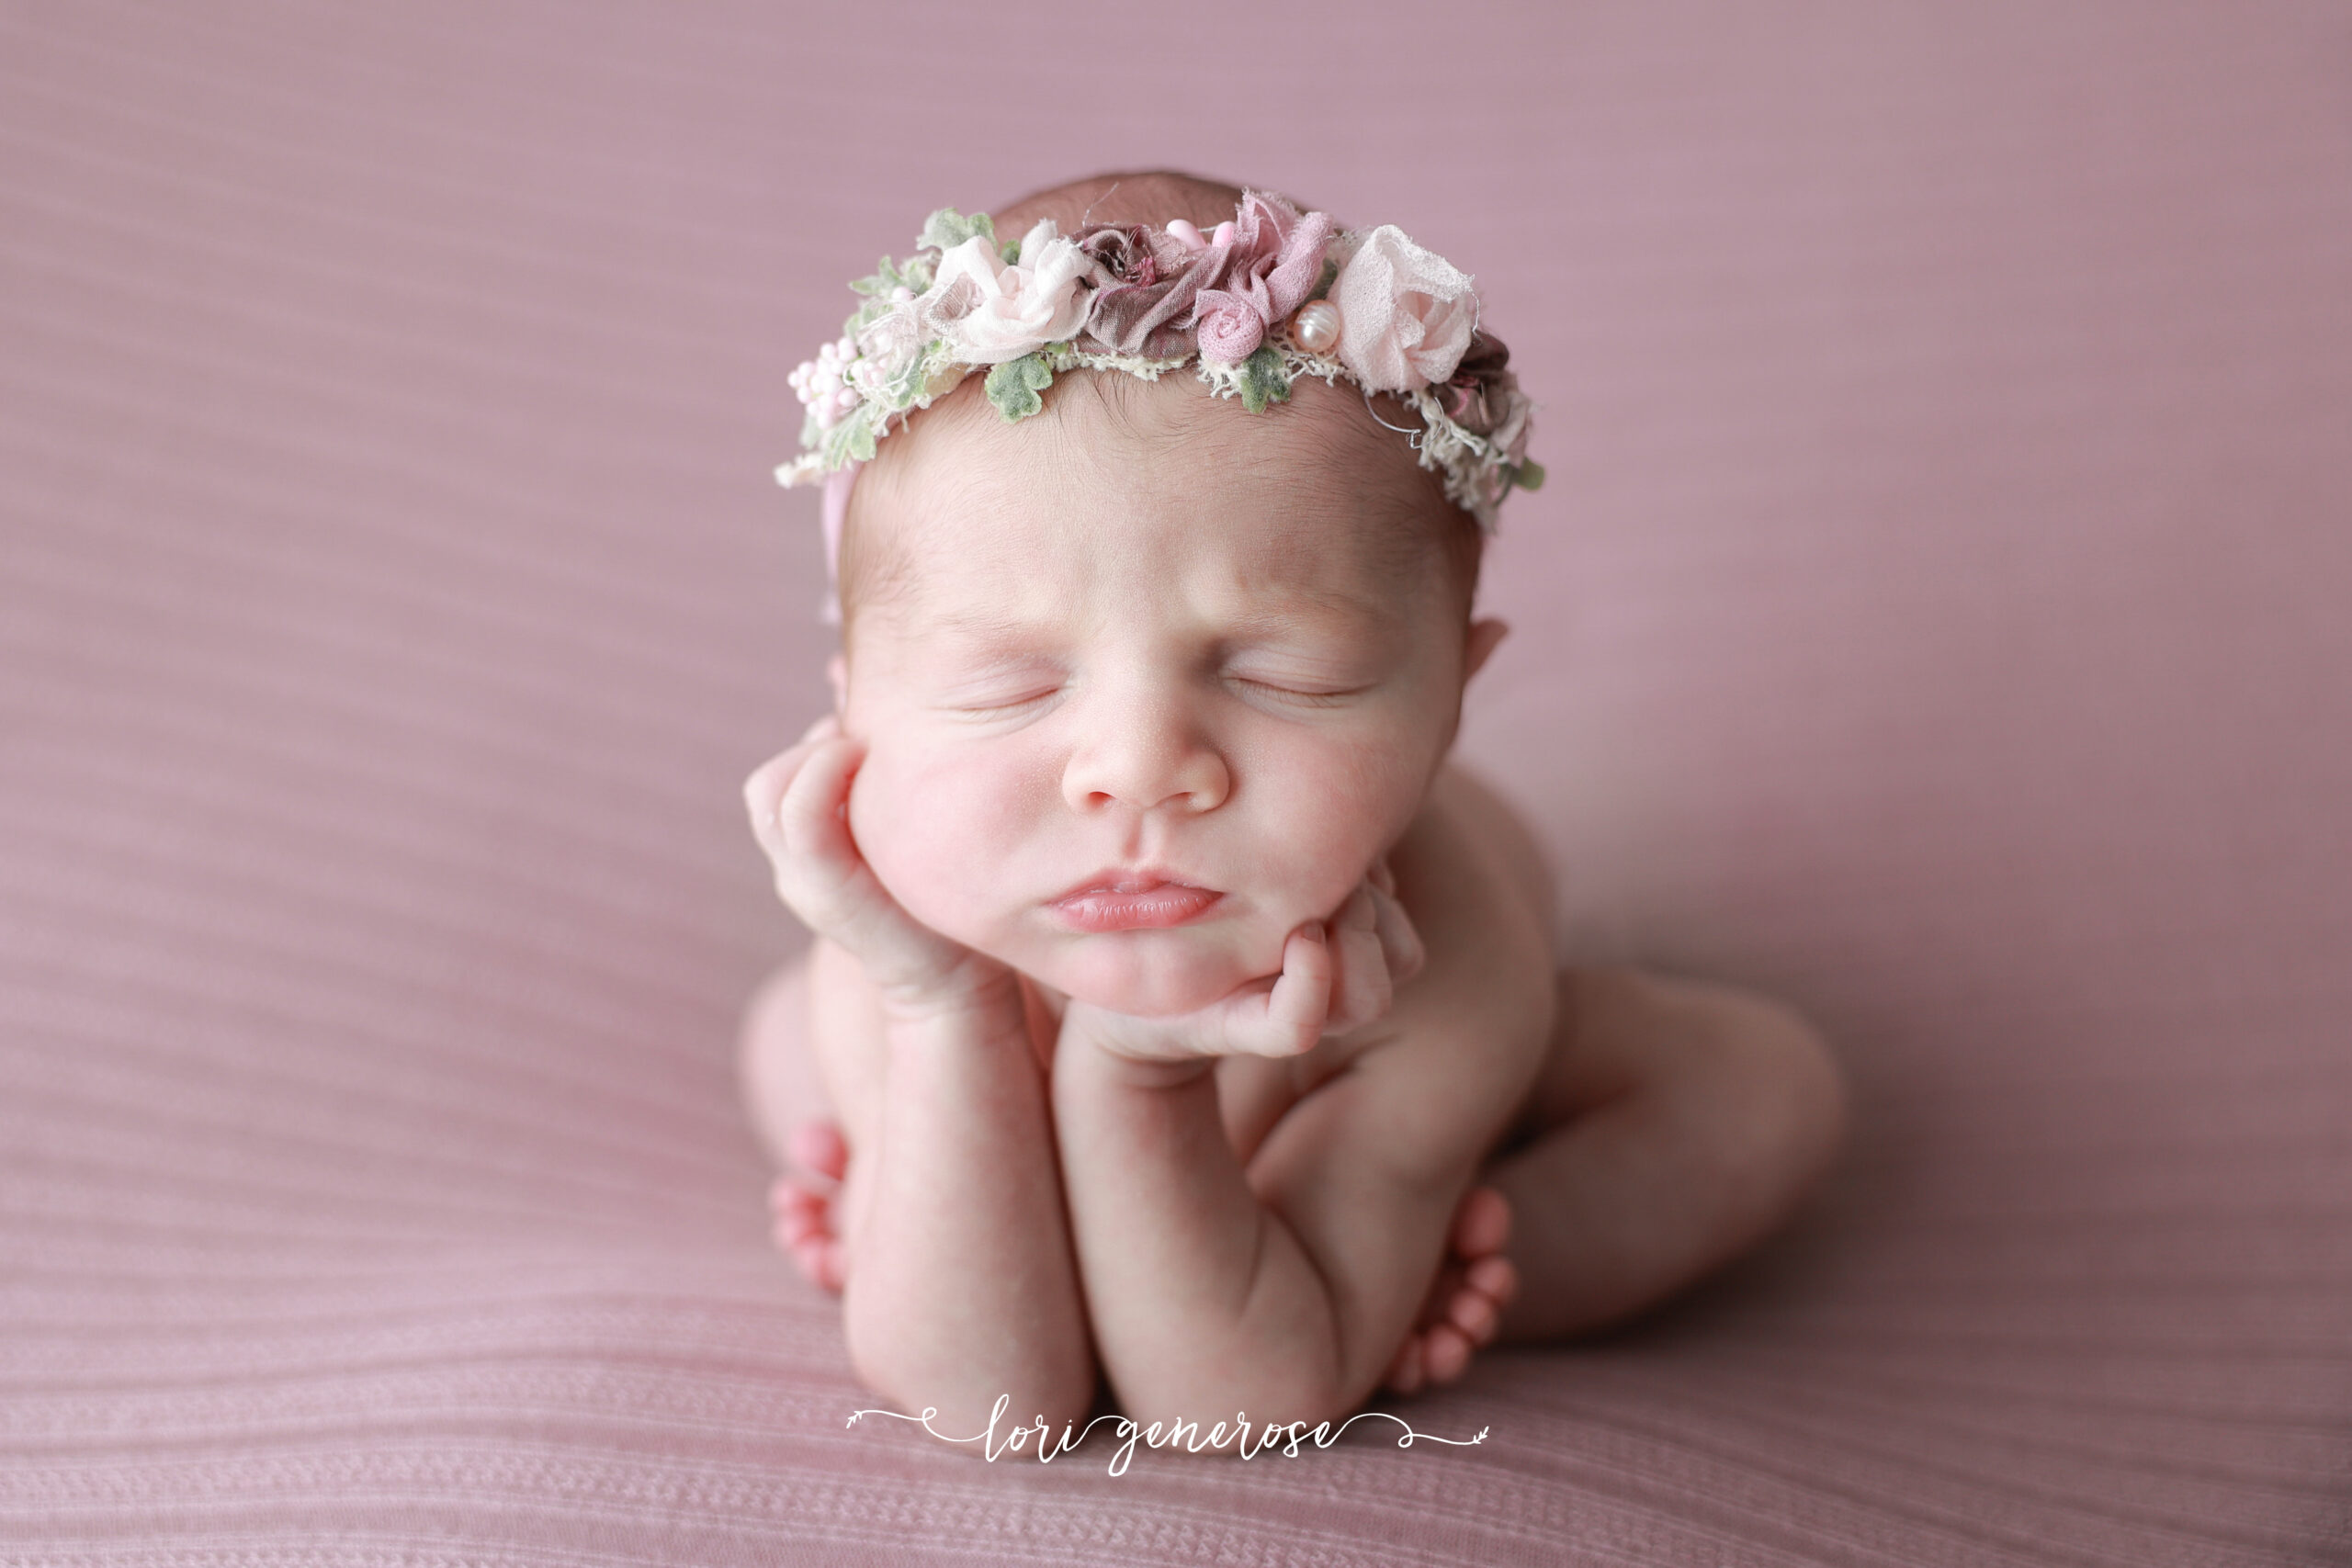 Lehigh Valley Photographer Lori Generose LG Photography Newborn Girl Photo Session Blog